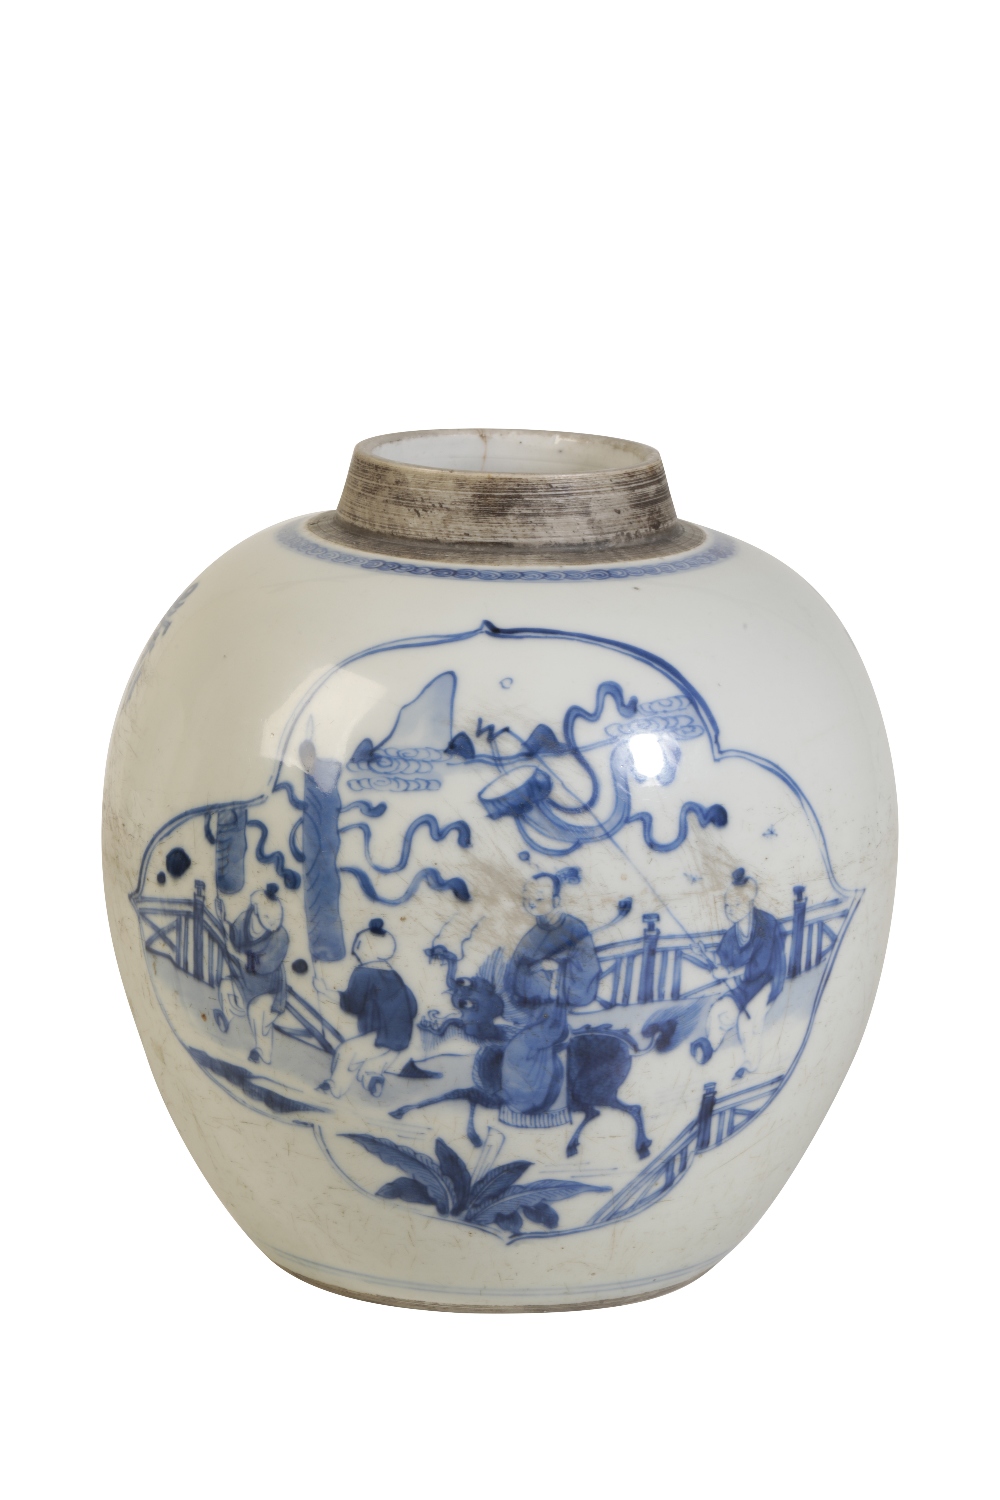 BLUE AND WHITE GINGER JAR, KANGXI PERIOD - Image 2 of 2